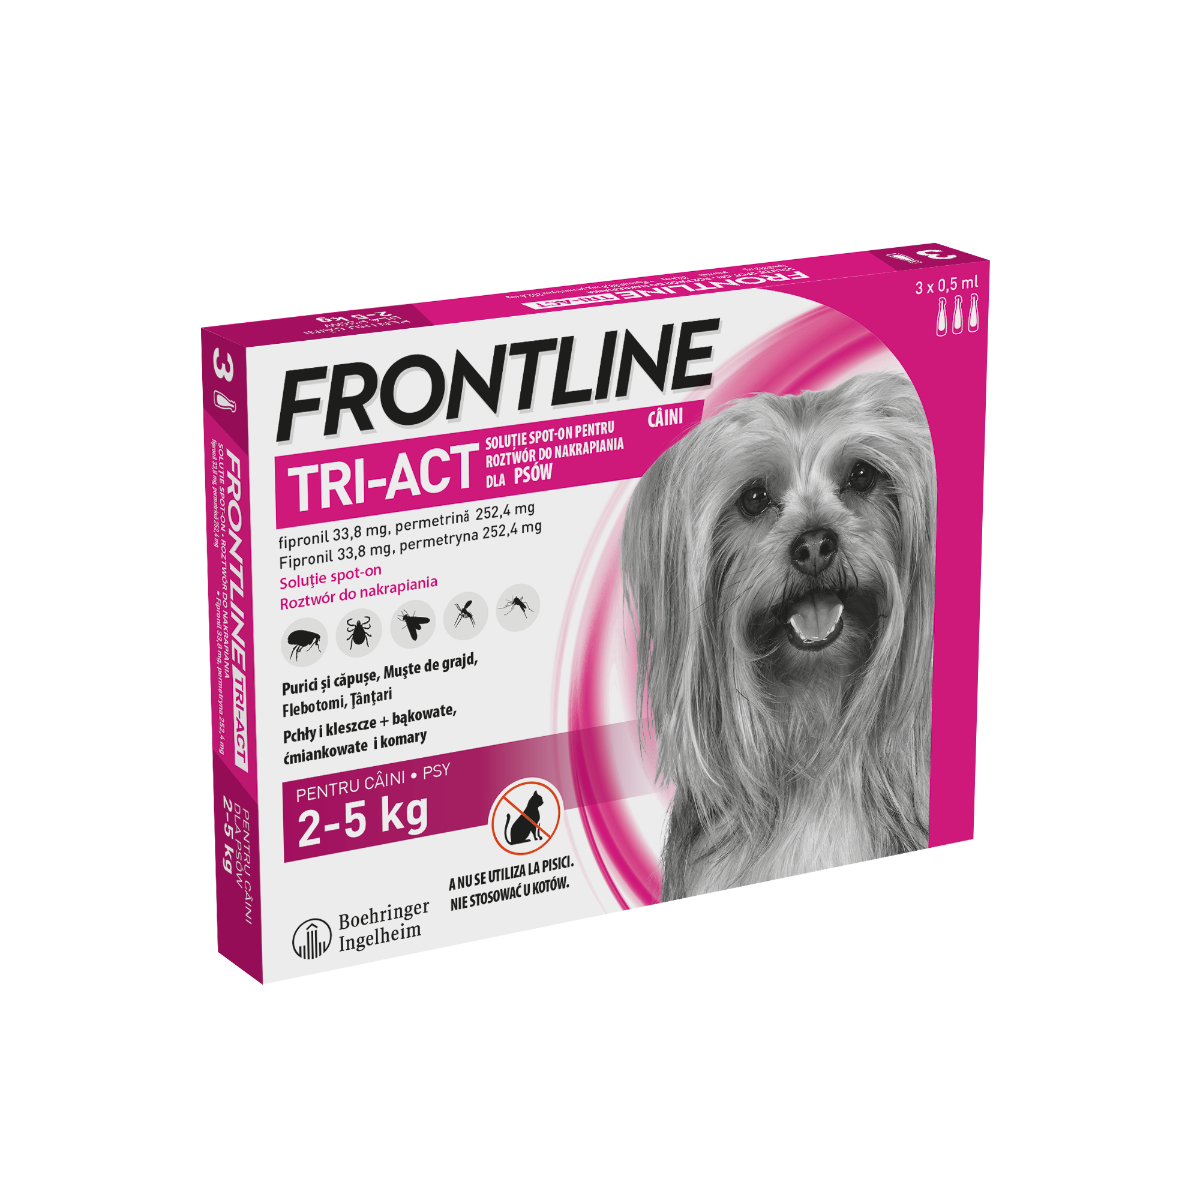 Frontline Tri-Act XS - spot-on pentru câini 2-5 kg, 3 pipete, Frontline